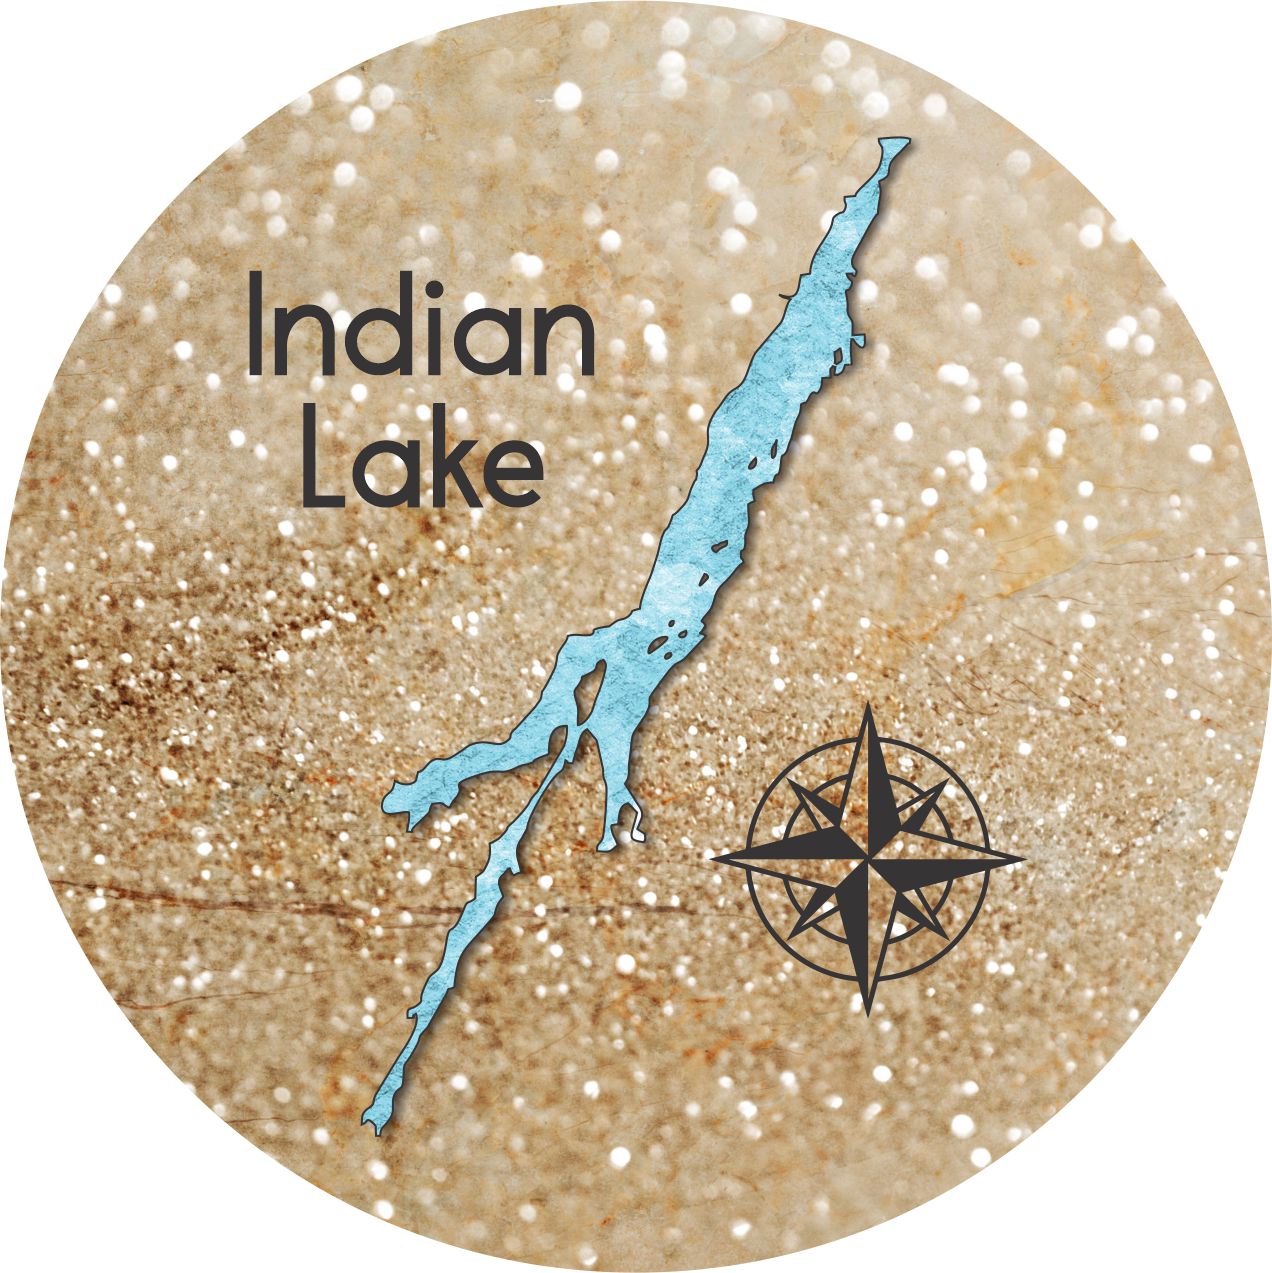 Indian Lake - Sandstone Coaster